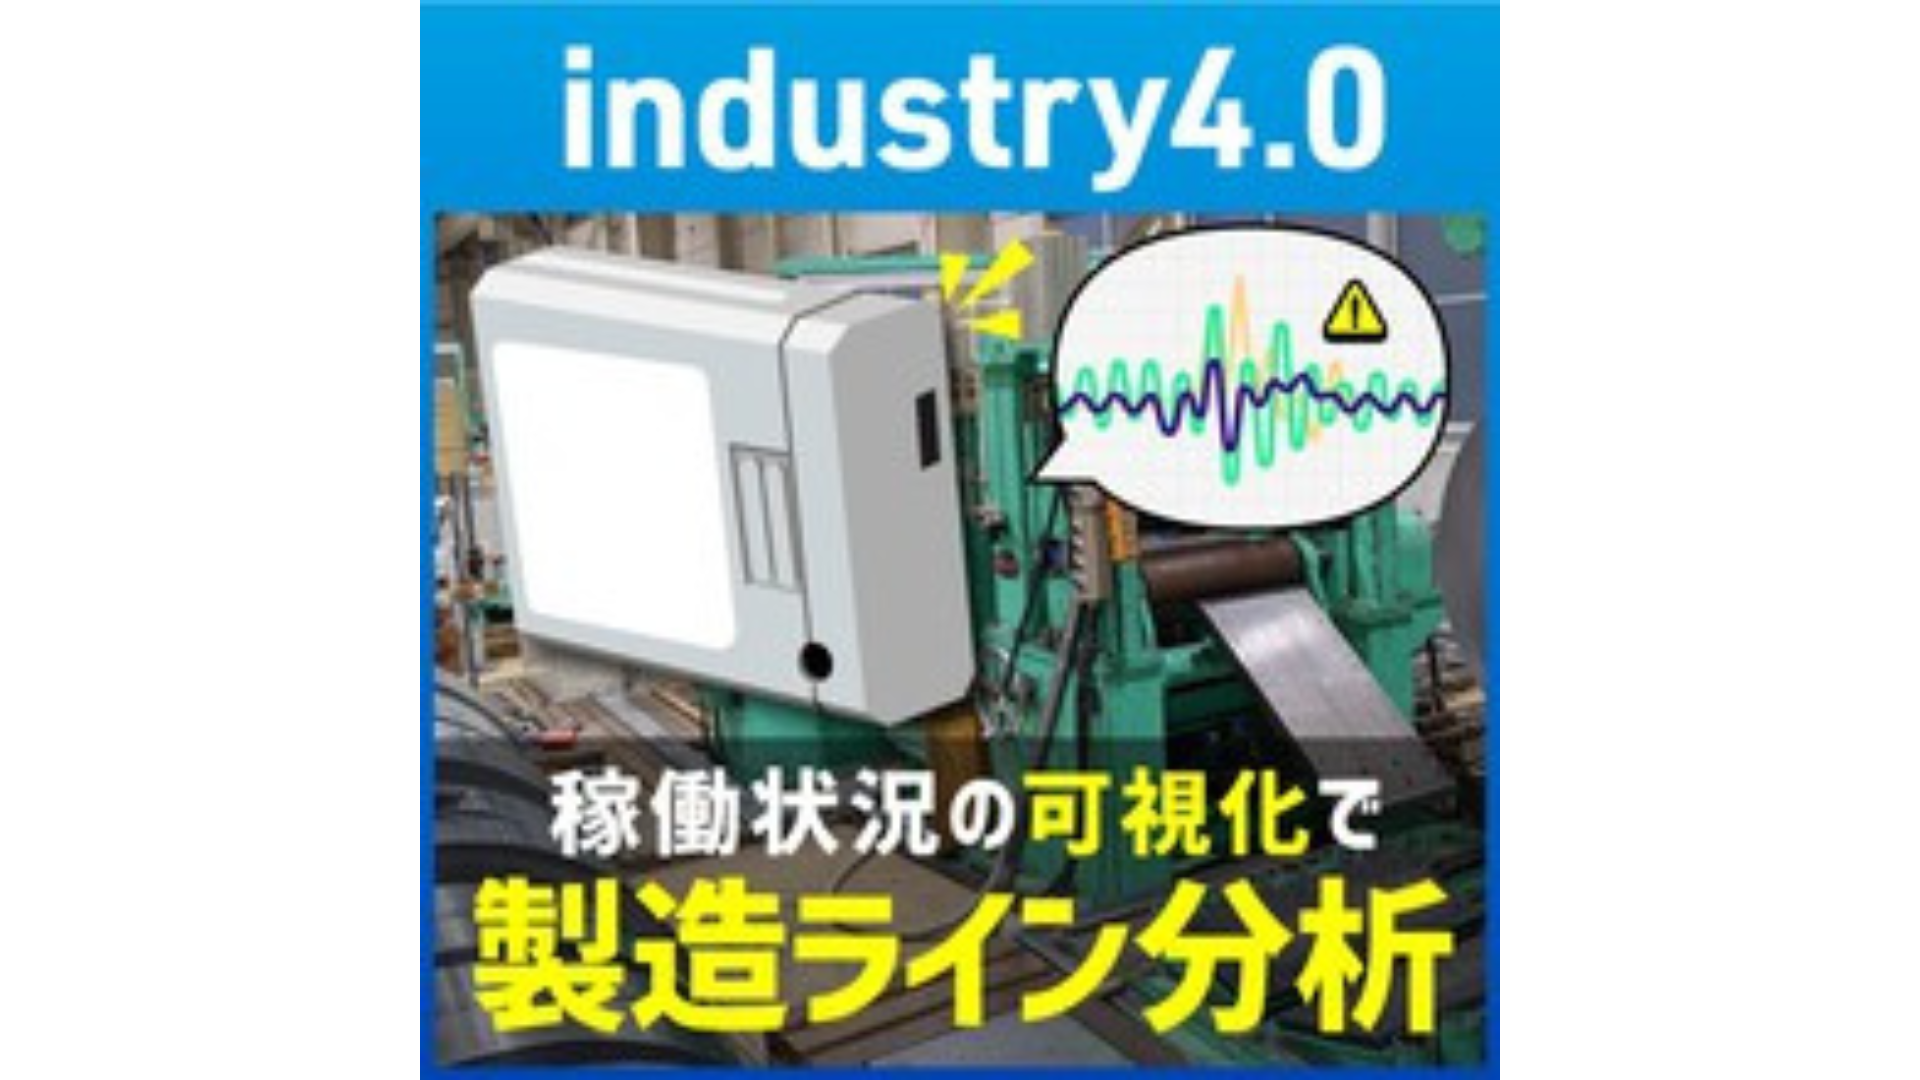 【Industry4.0】製造設備の稼働状況の可視化・分析を簡単&リーズナブルに実現するIoTソリューション